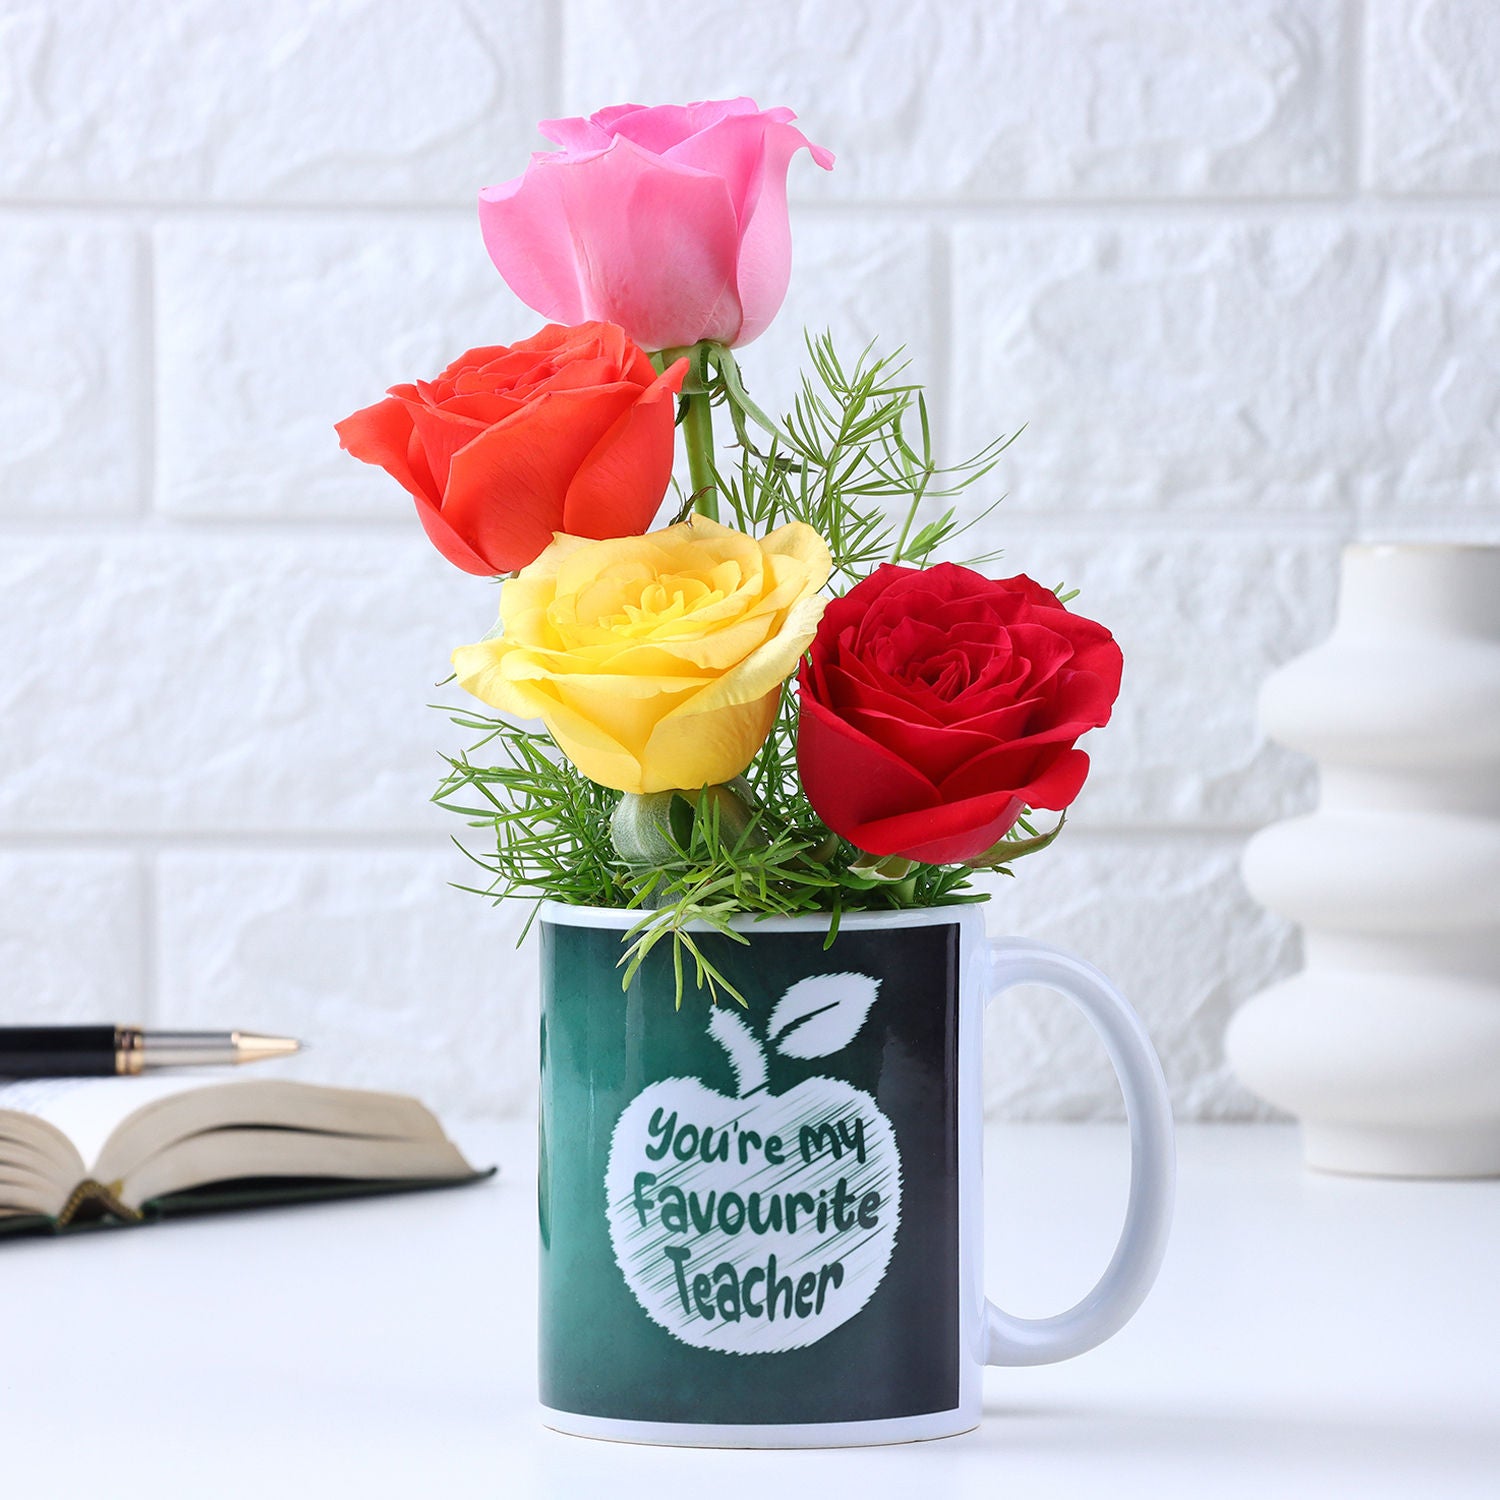 Teachers Day Mug of Joyful Roses